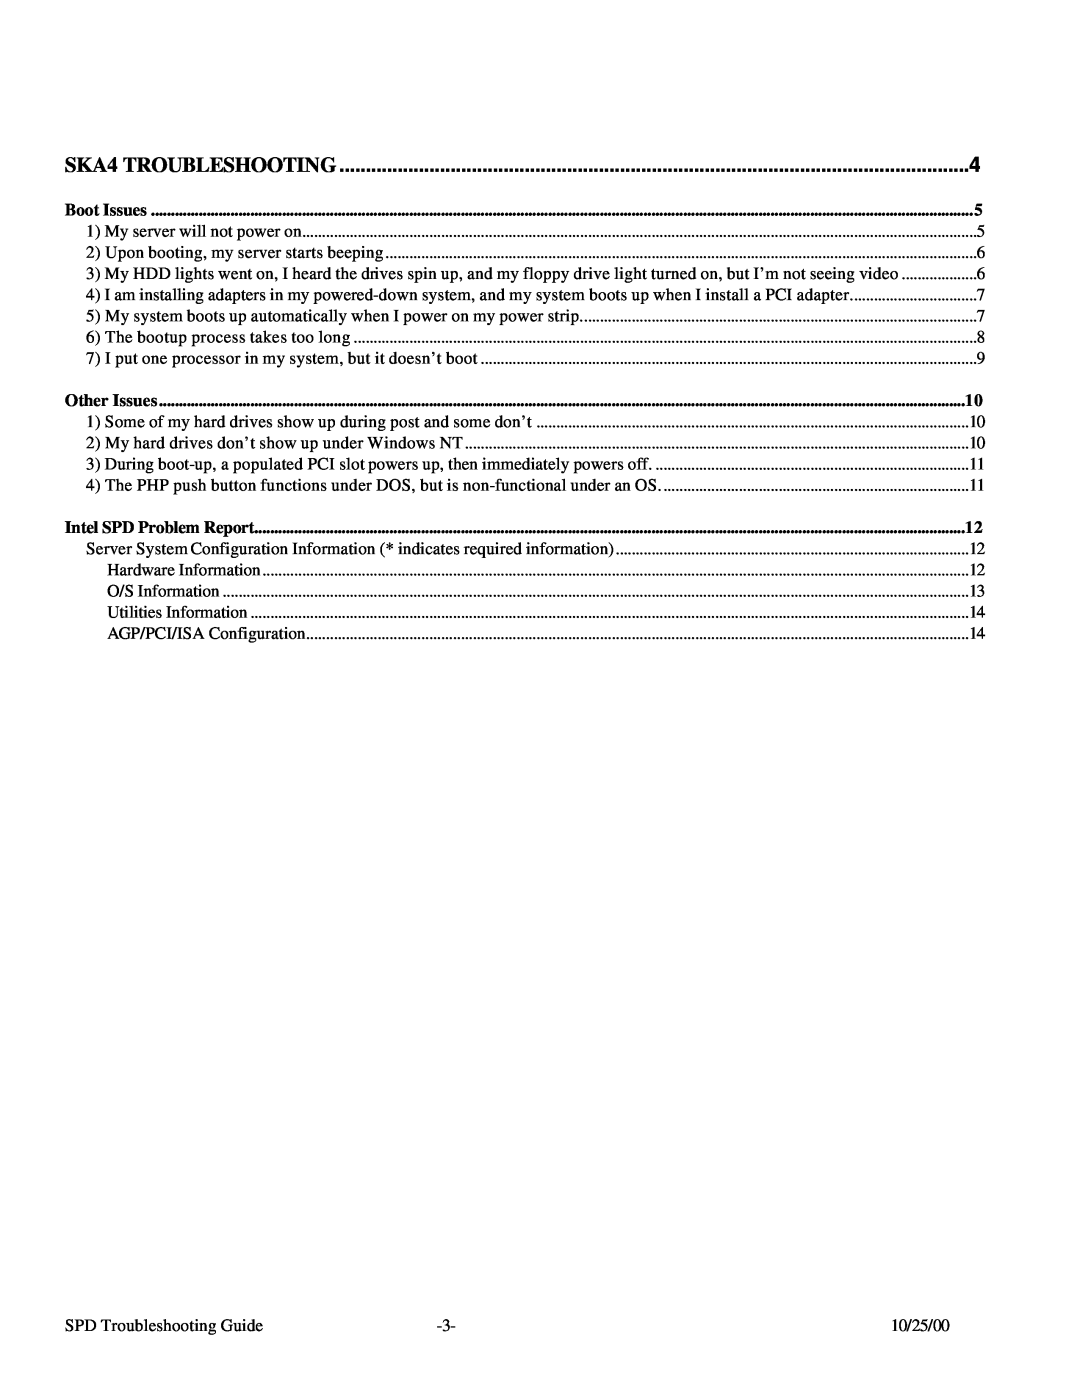 Intel manual SKA4 TROUBLESHOOTING, Intel SPD Problem Report 